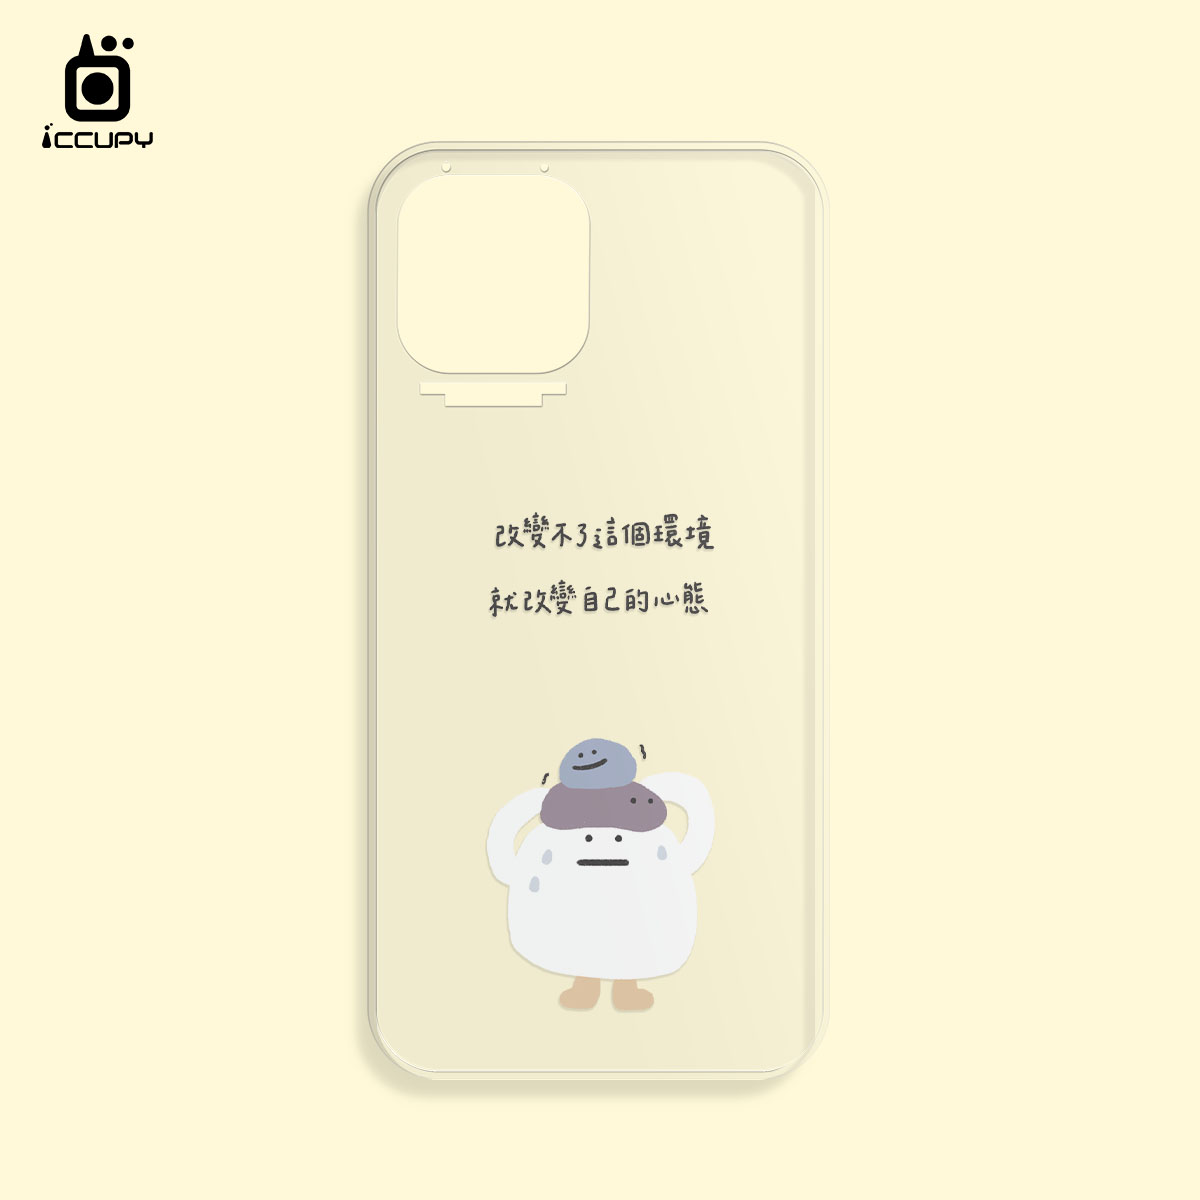 【懶懶怪｜改變】iCCUPY黑占盾專用透明背板(無外殼) For iPhone 12 